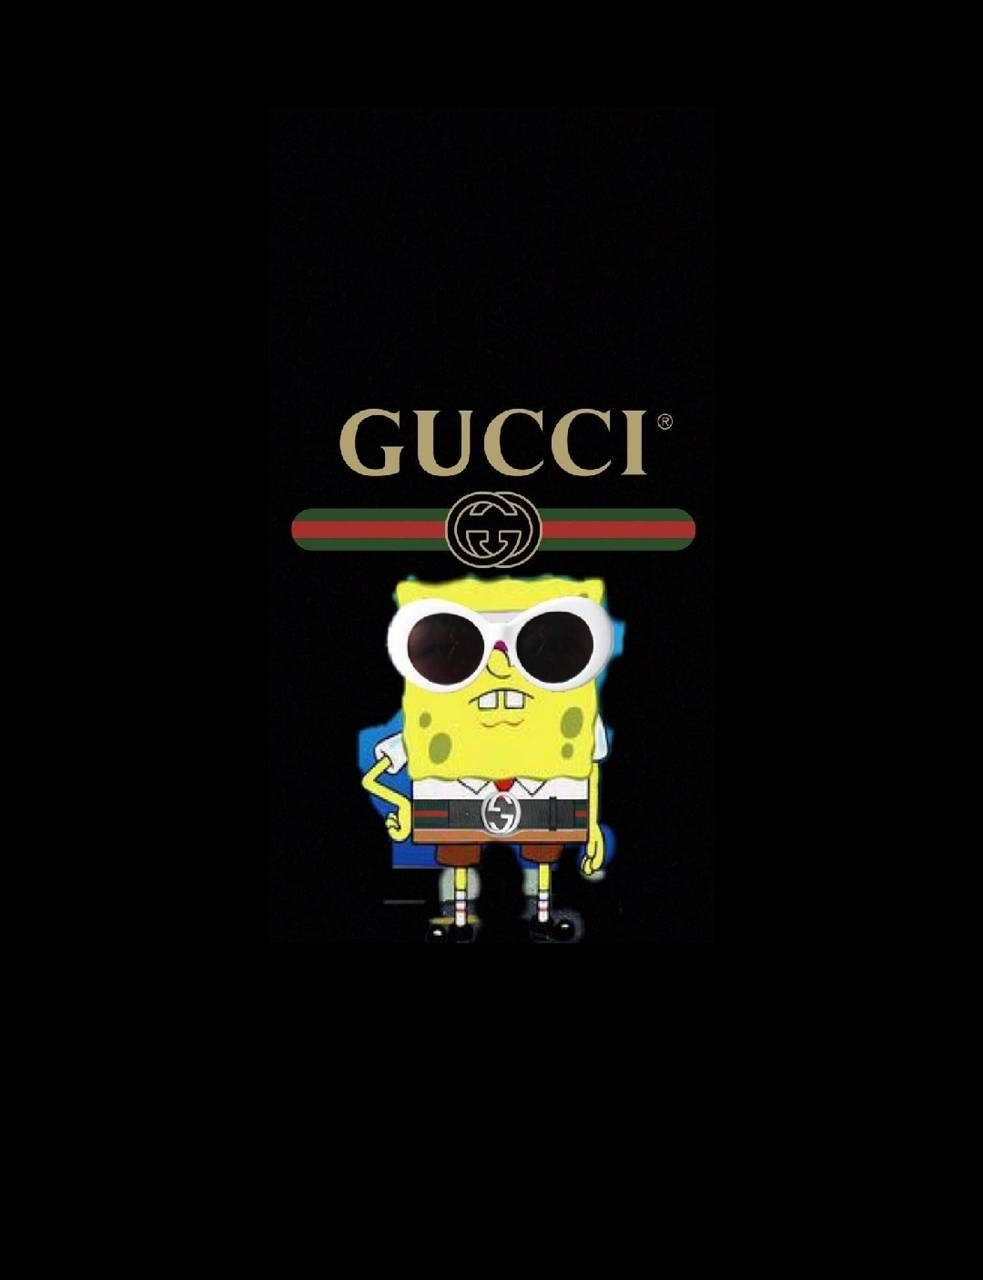 Download Gucci spongebob Wallpaper by MasterSasuke1  52  Free on ZEDGE  now Brows  Funny iphone wallpaper Spongebob iphone wallpaper Cartoon  wallpaper iphone